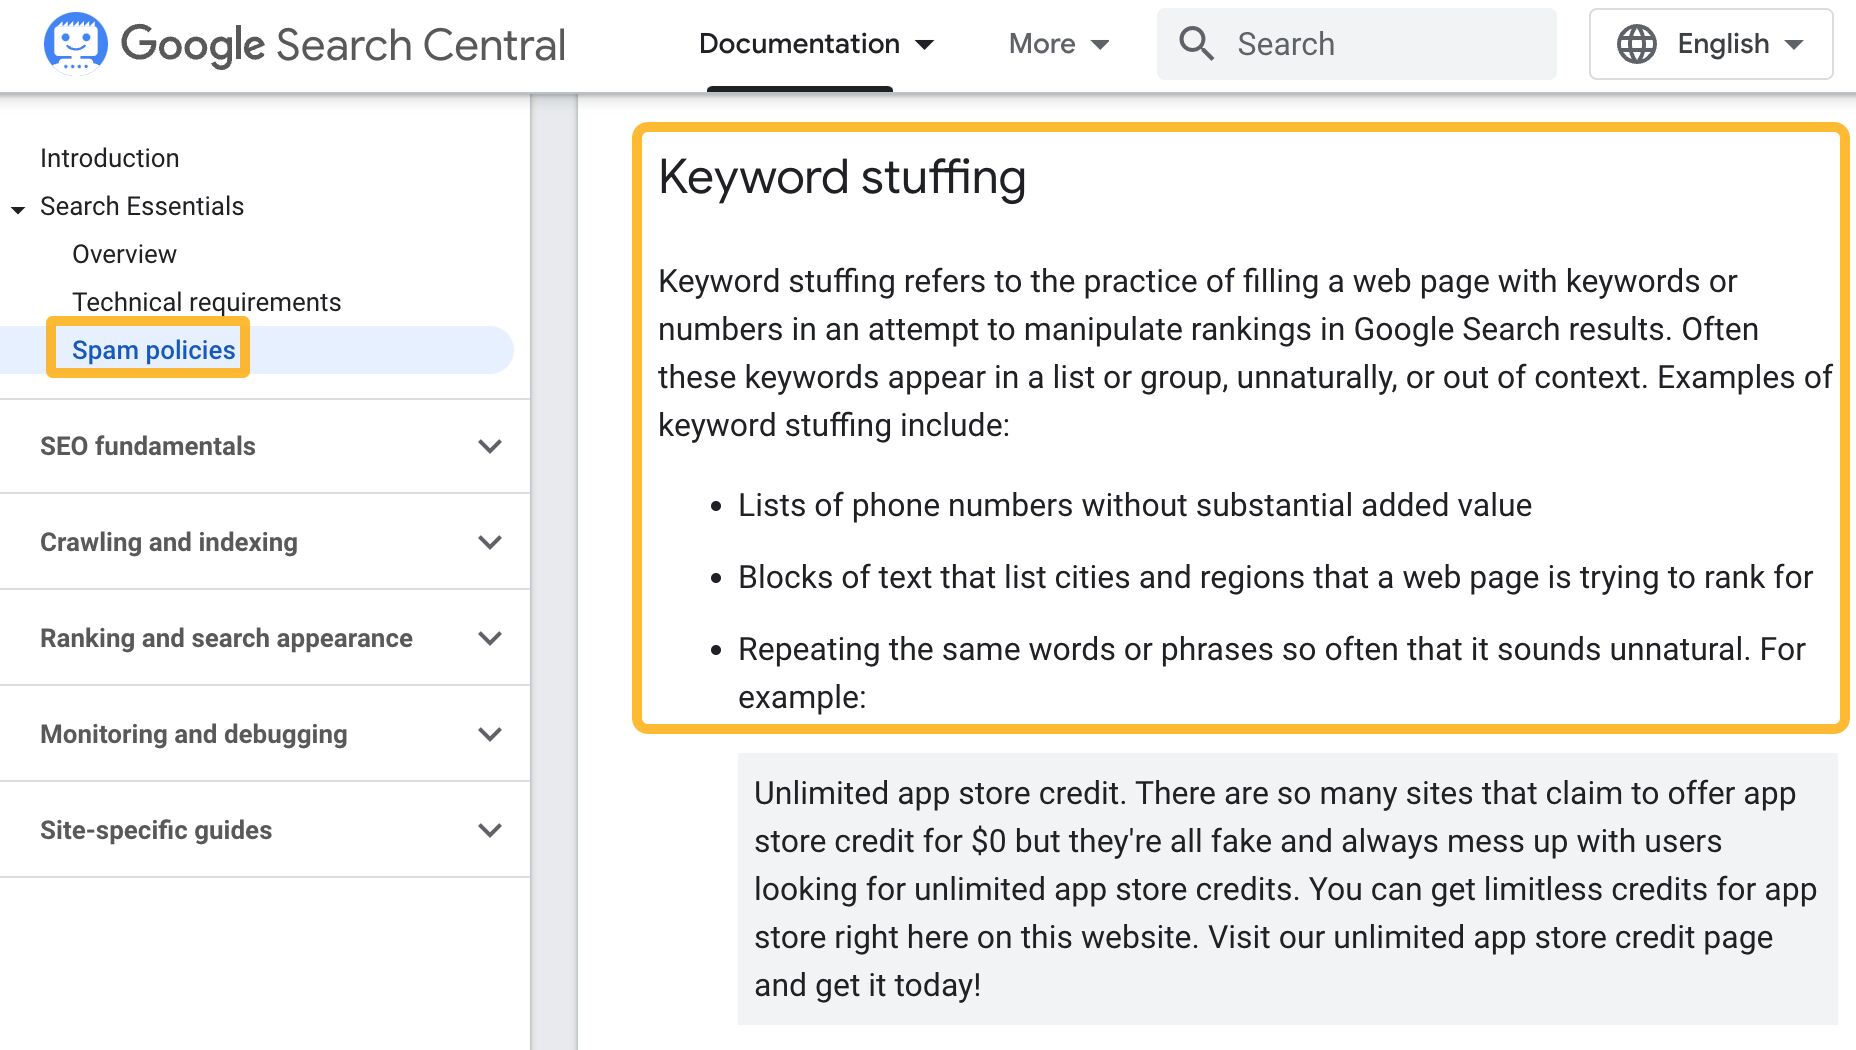 Google's guidelines against keyword stuffing